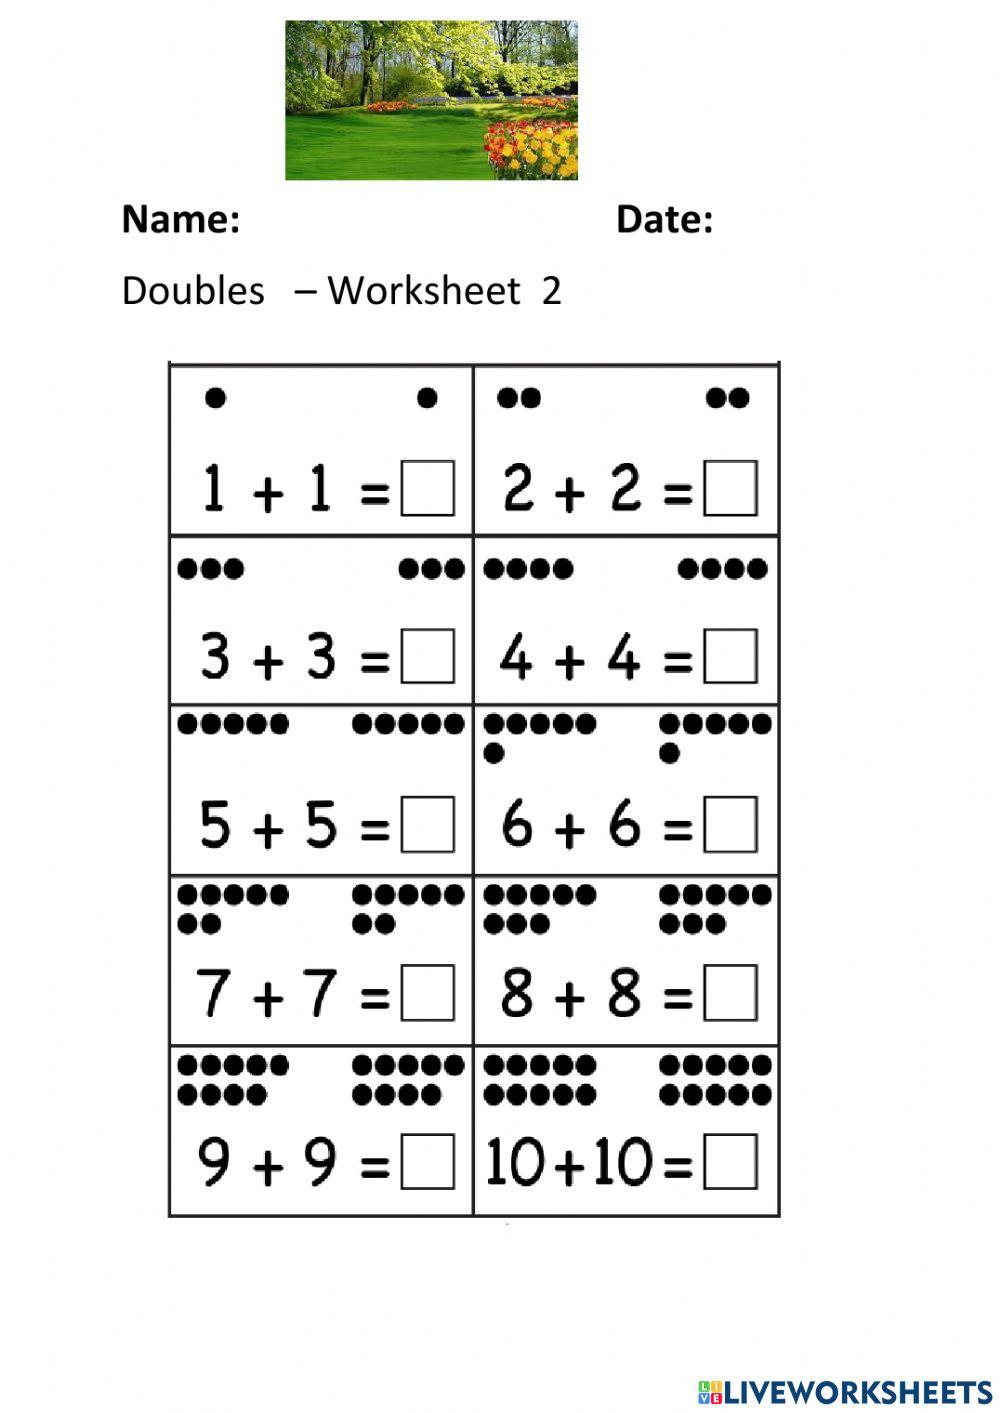 Doubles Worksheet 2